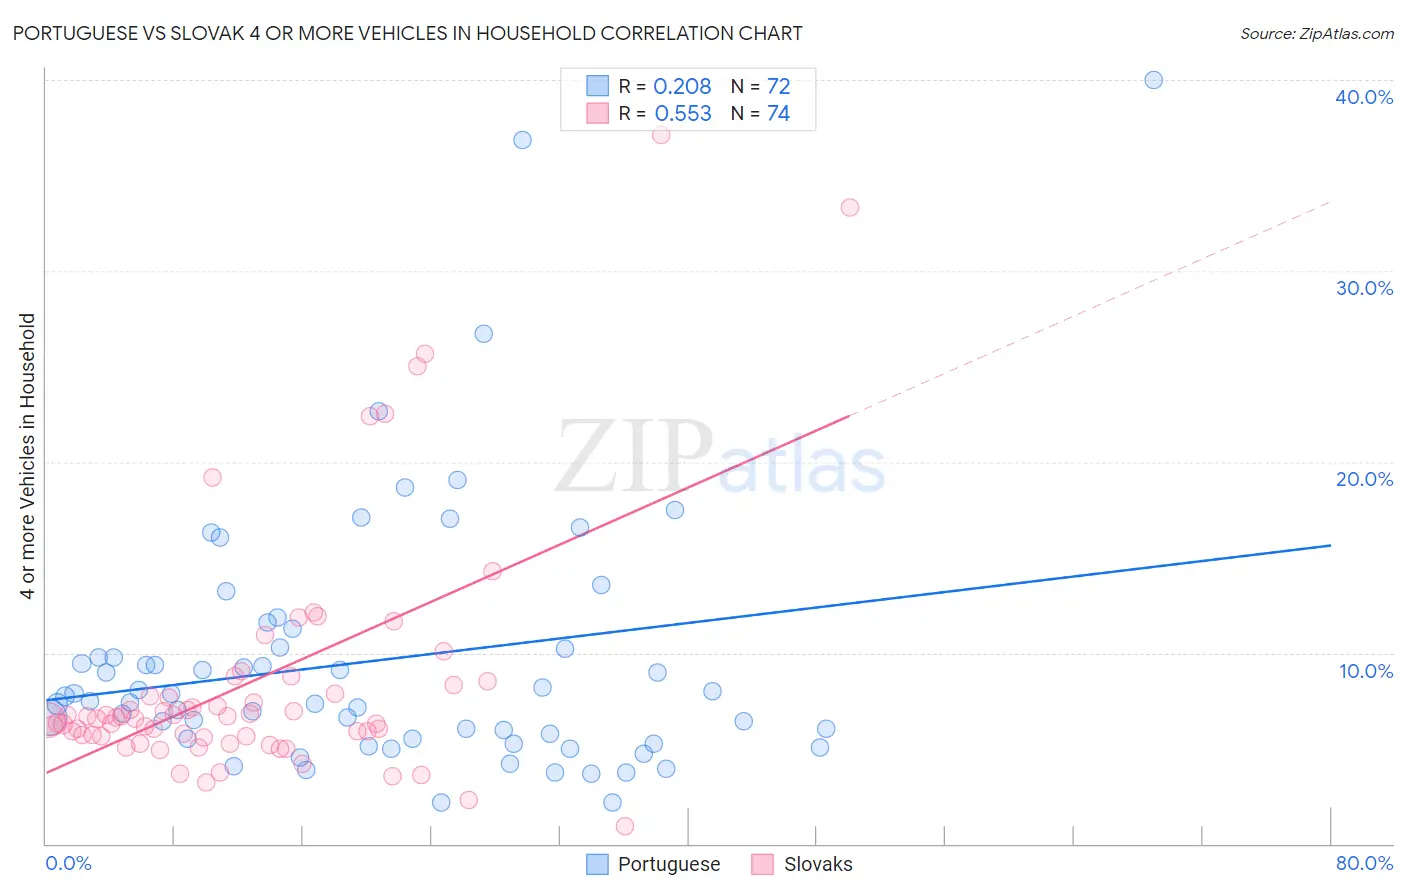 Portuguese vs Slovak 4 or more Vehicles in Household